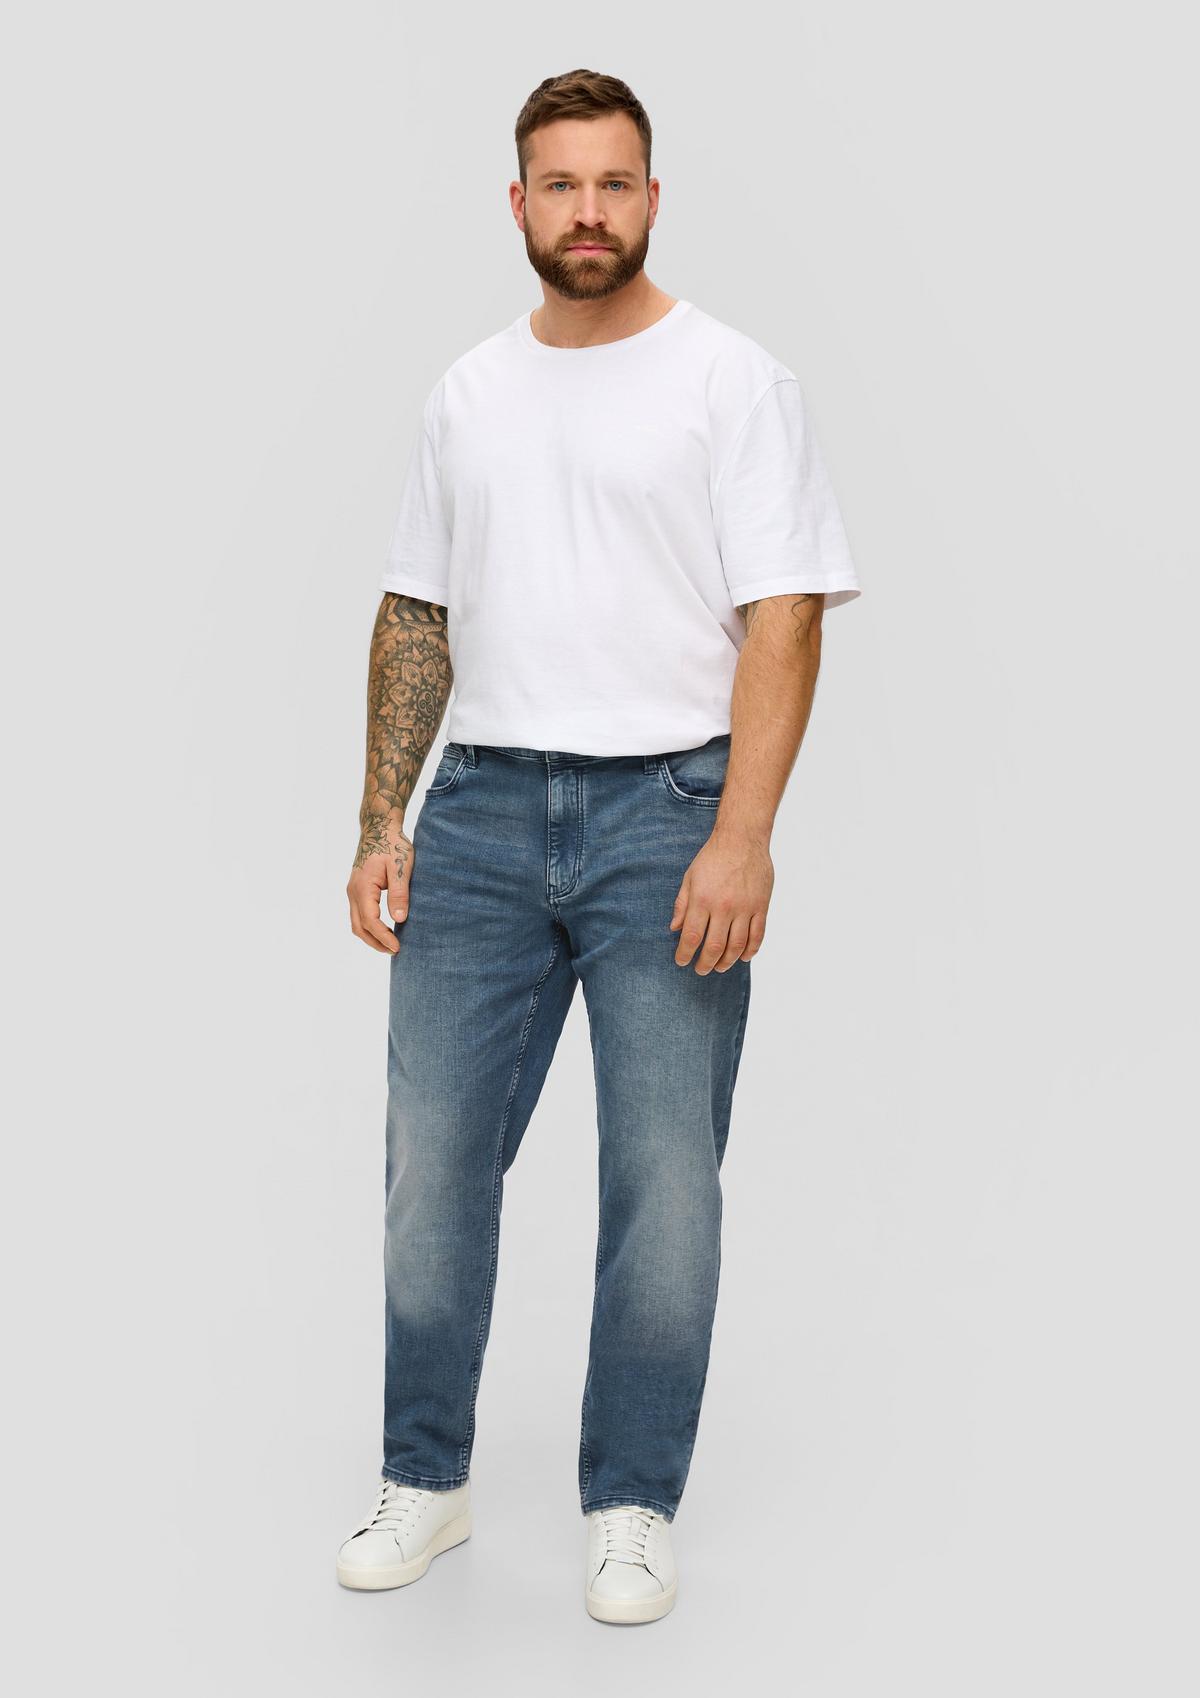 Jeans hlače York/kroj Regular Fit/Mid Rise/običajne hlačnice